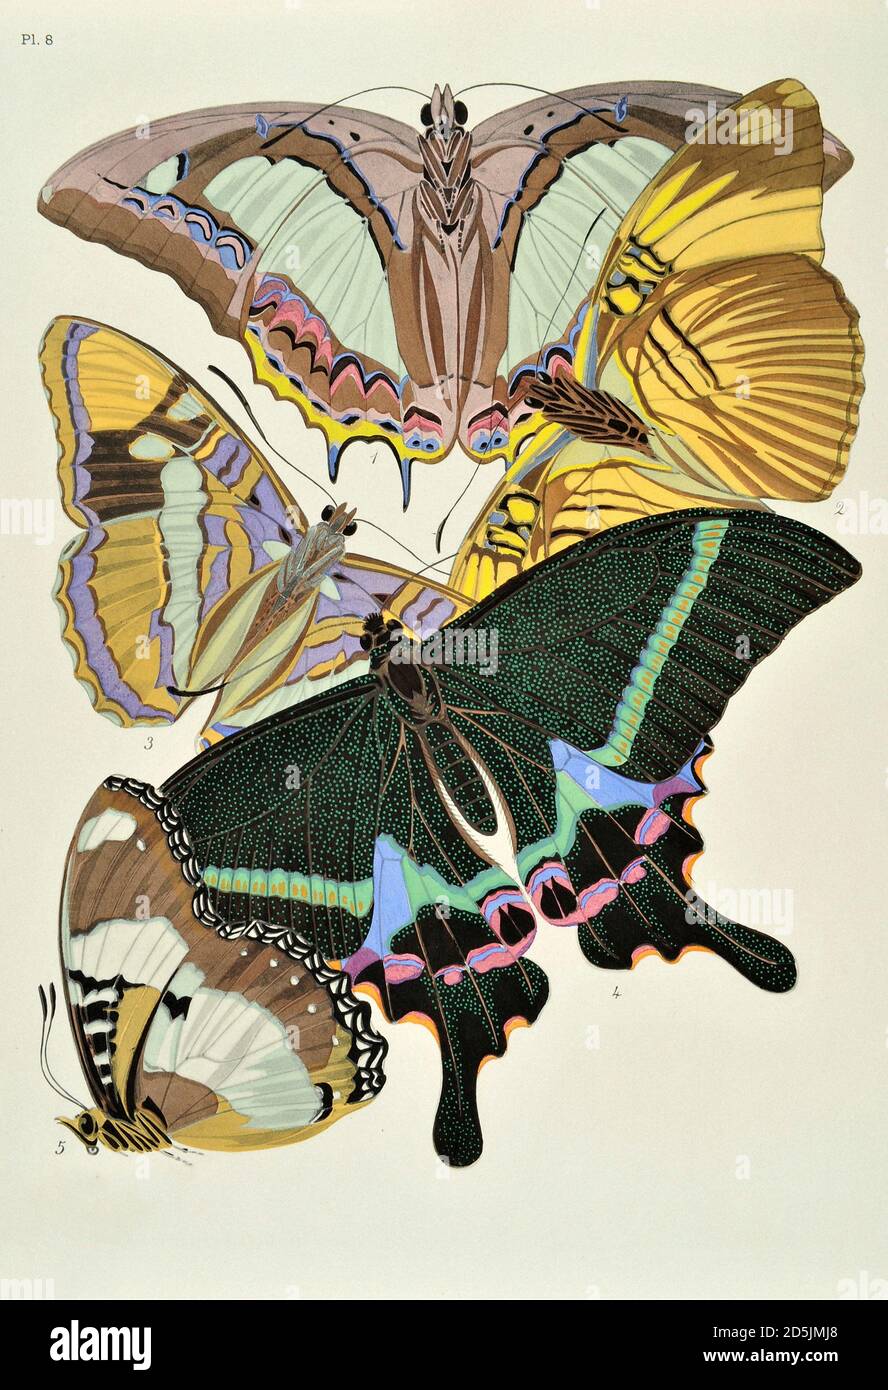 Farfalle: Venti pannelli fototype colorati al modello. PL VIII 1. Eriboea athamas (India) 2. Adelpha melanippe (Venezuela) 3. Adelpha bredowi (N. Foto Stock